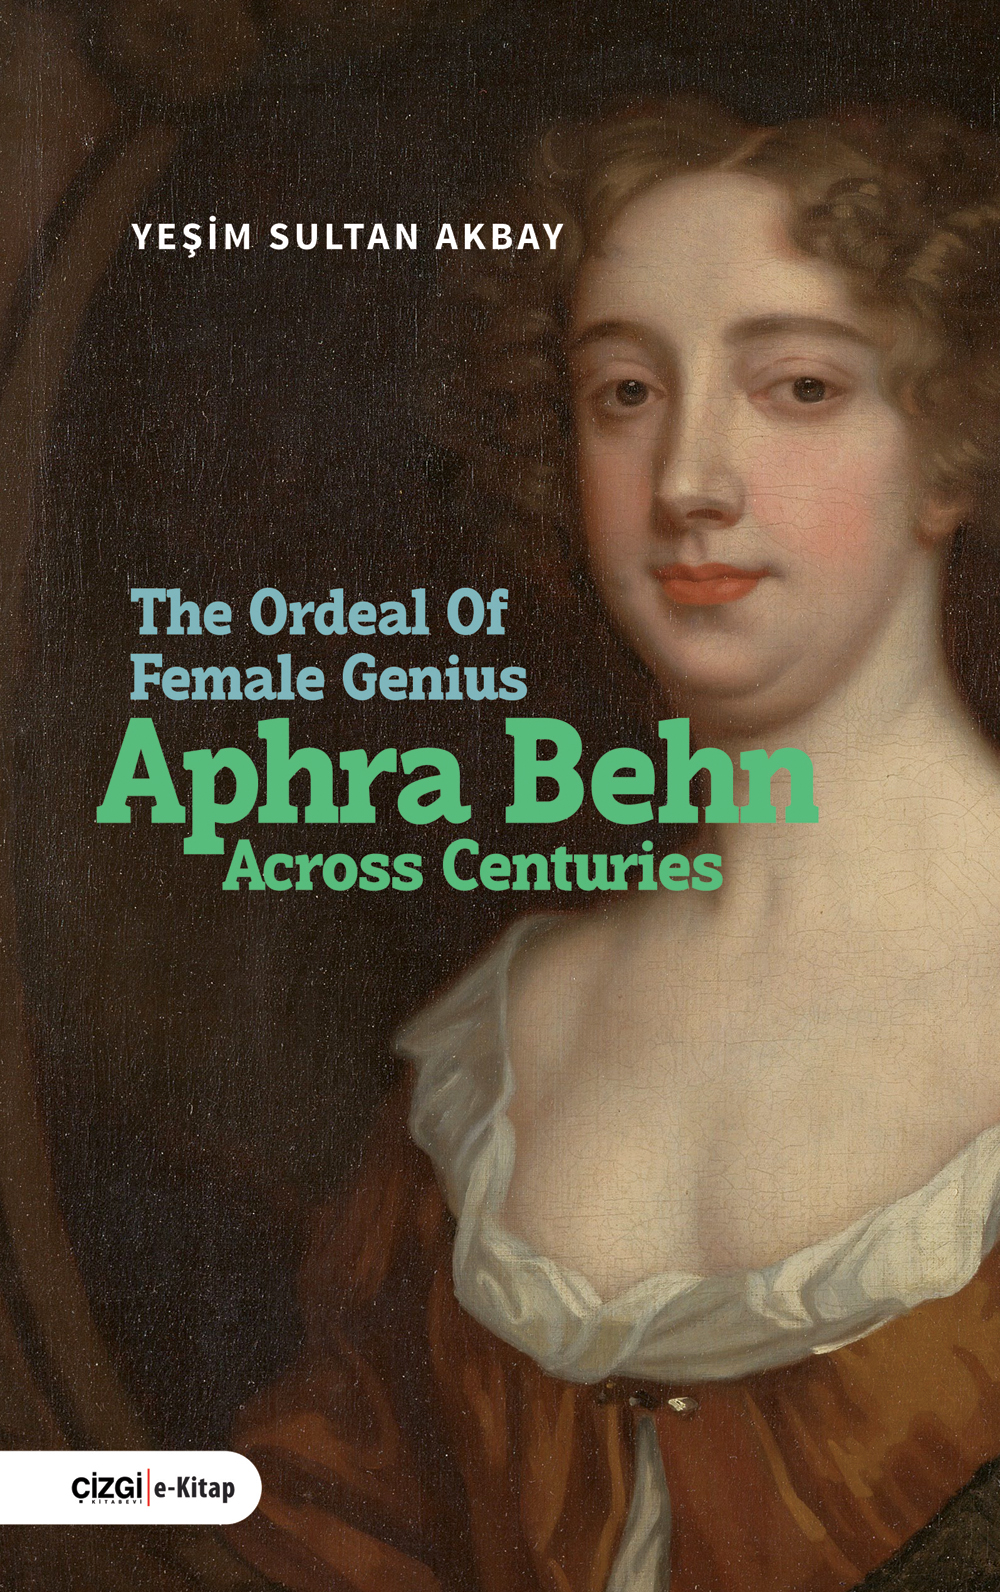 libraryturk.com the ordeal of female genius: aphra behn across centuries